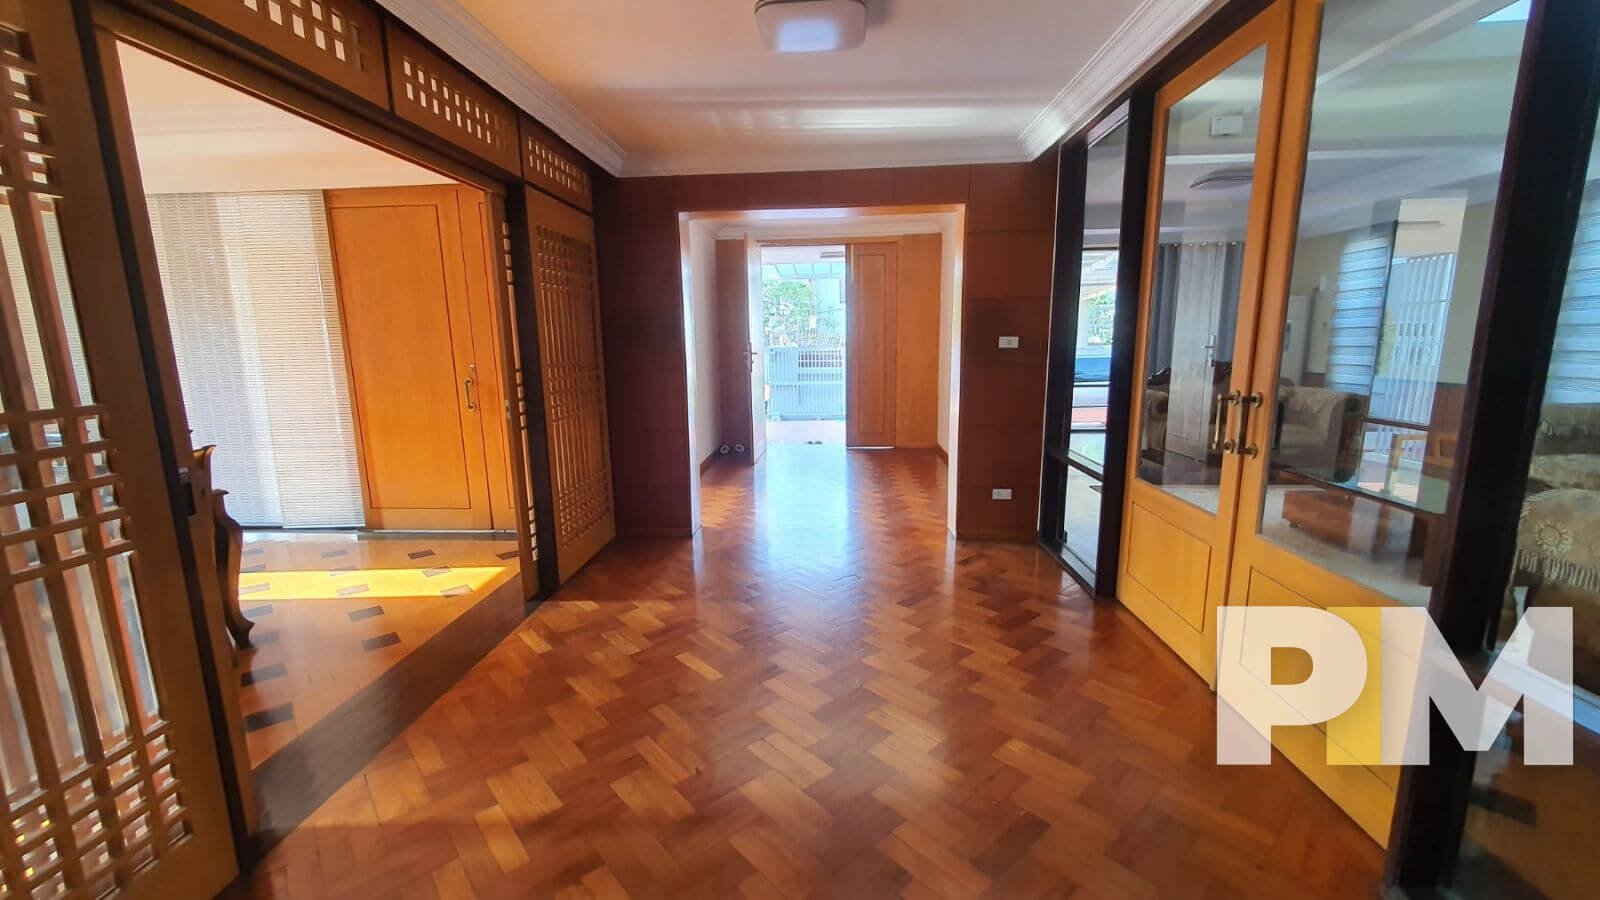 corridor - House for rent in Bahan